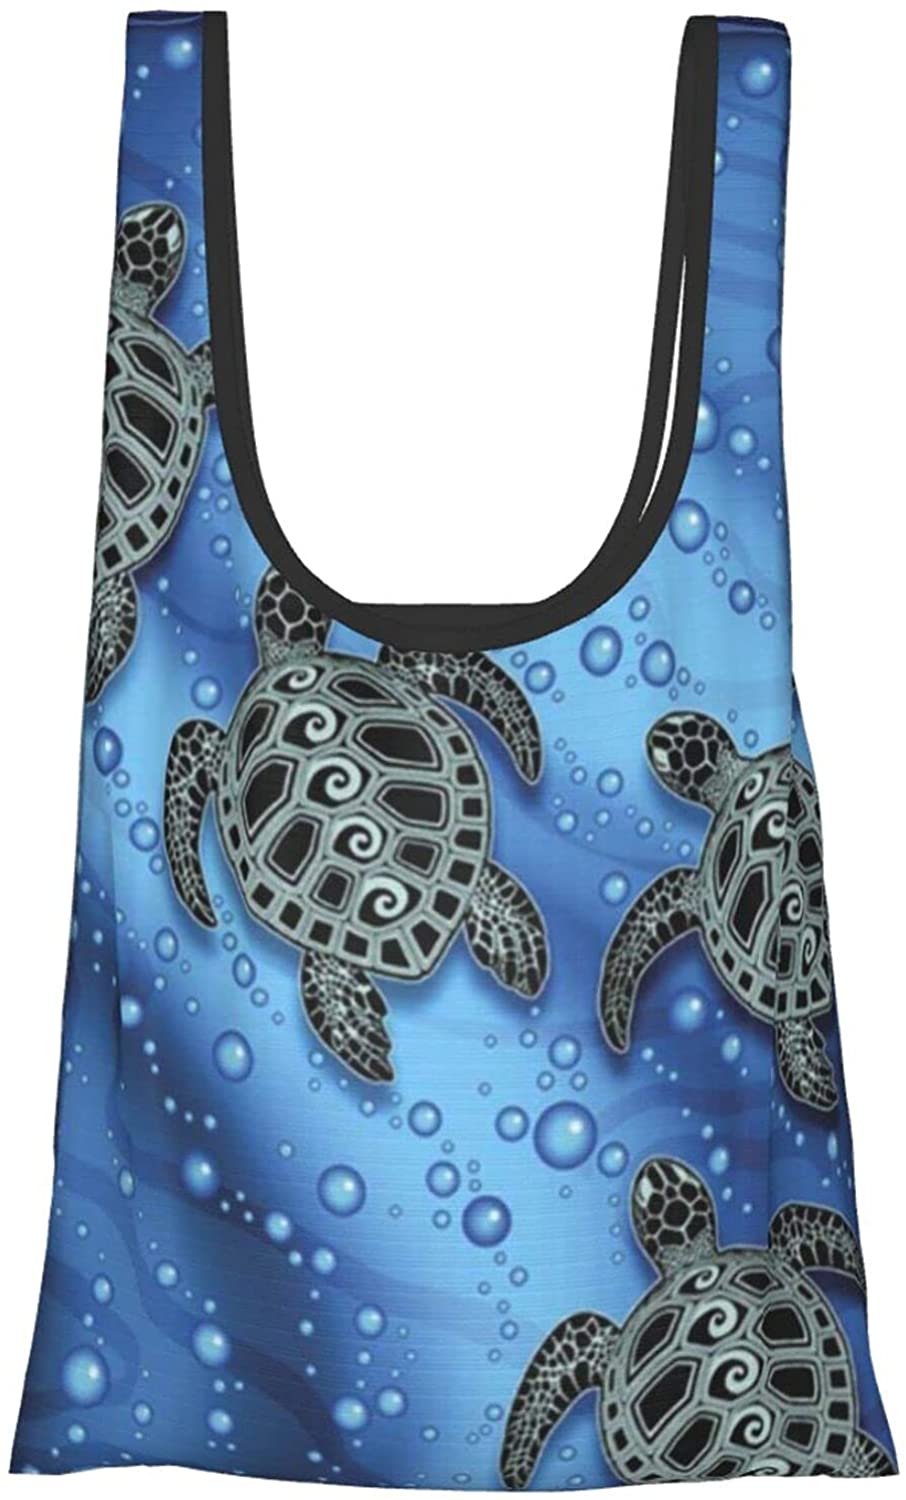 NEW Marshalls Shopping Bag Sea Turtles Reusable Tote EcoFriendly 